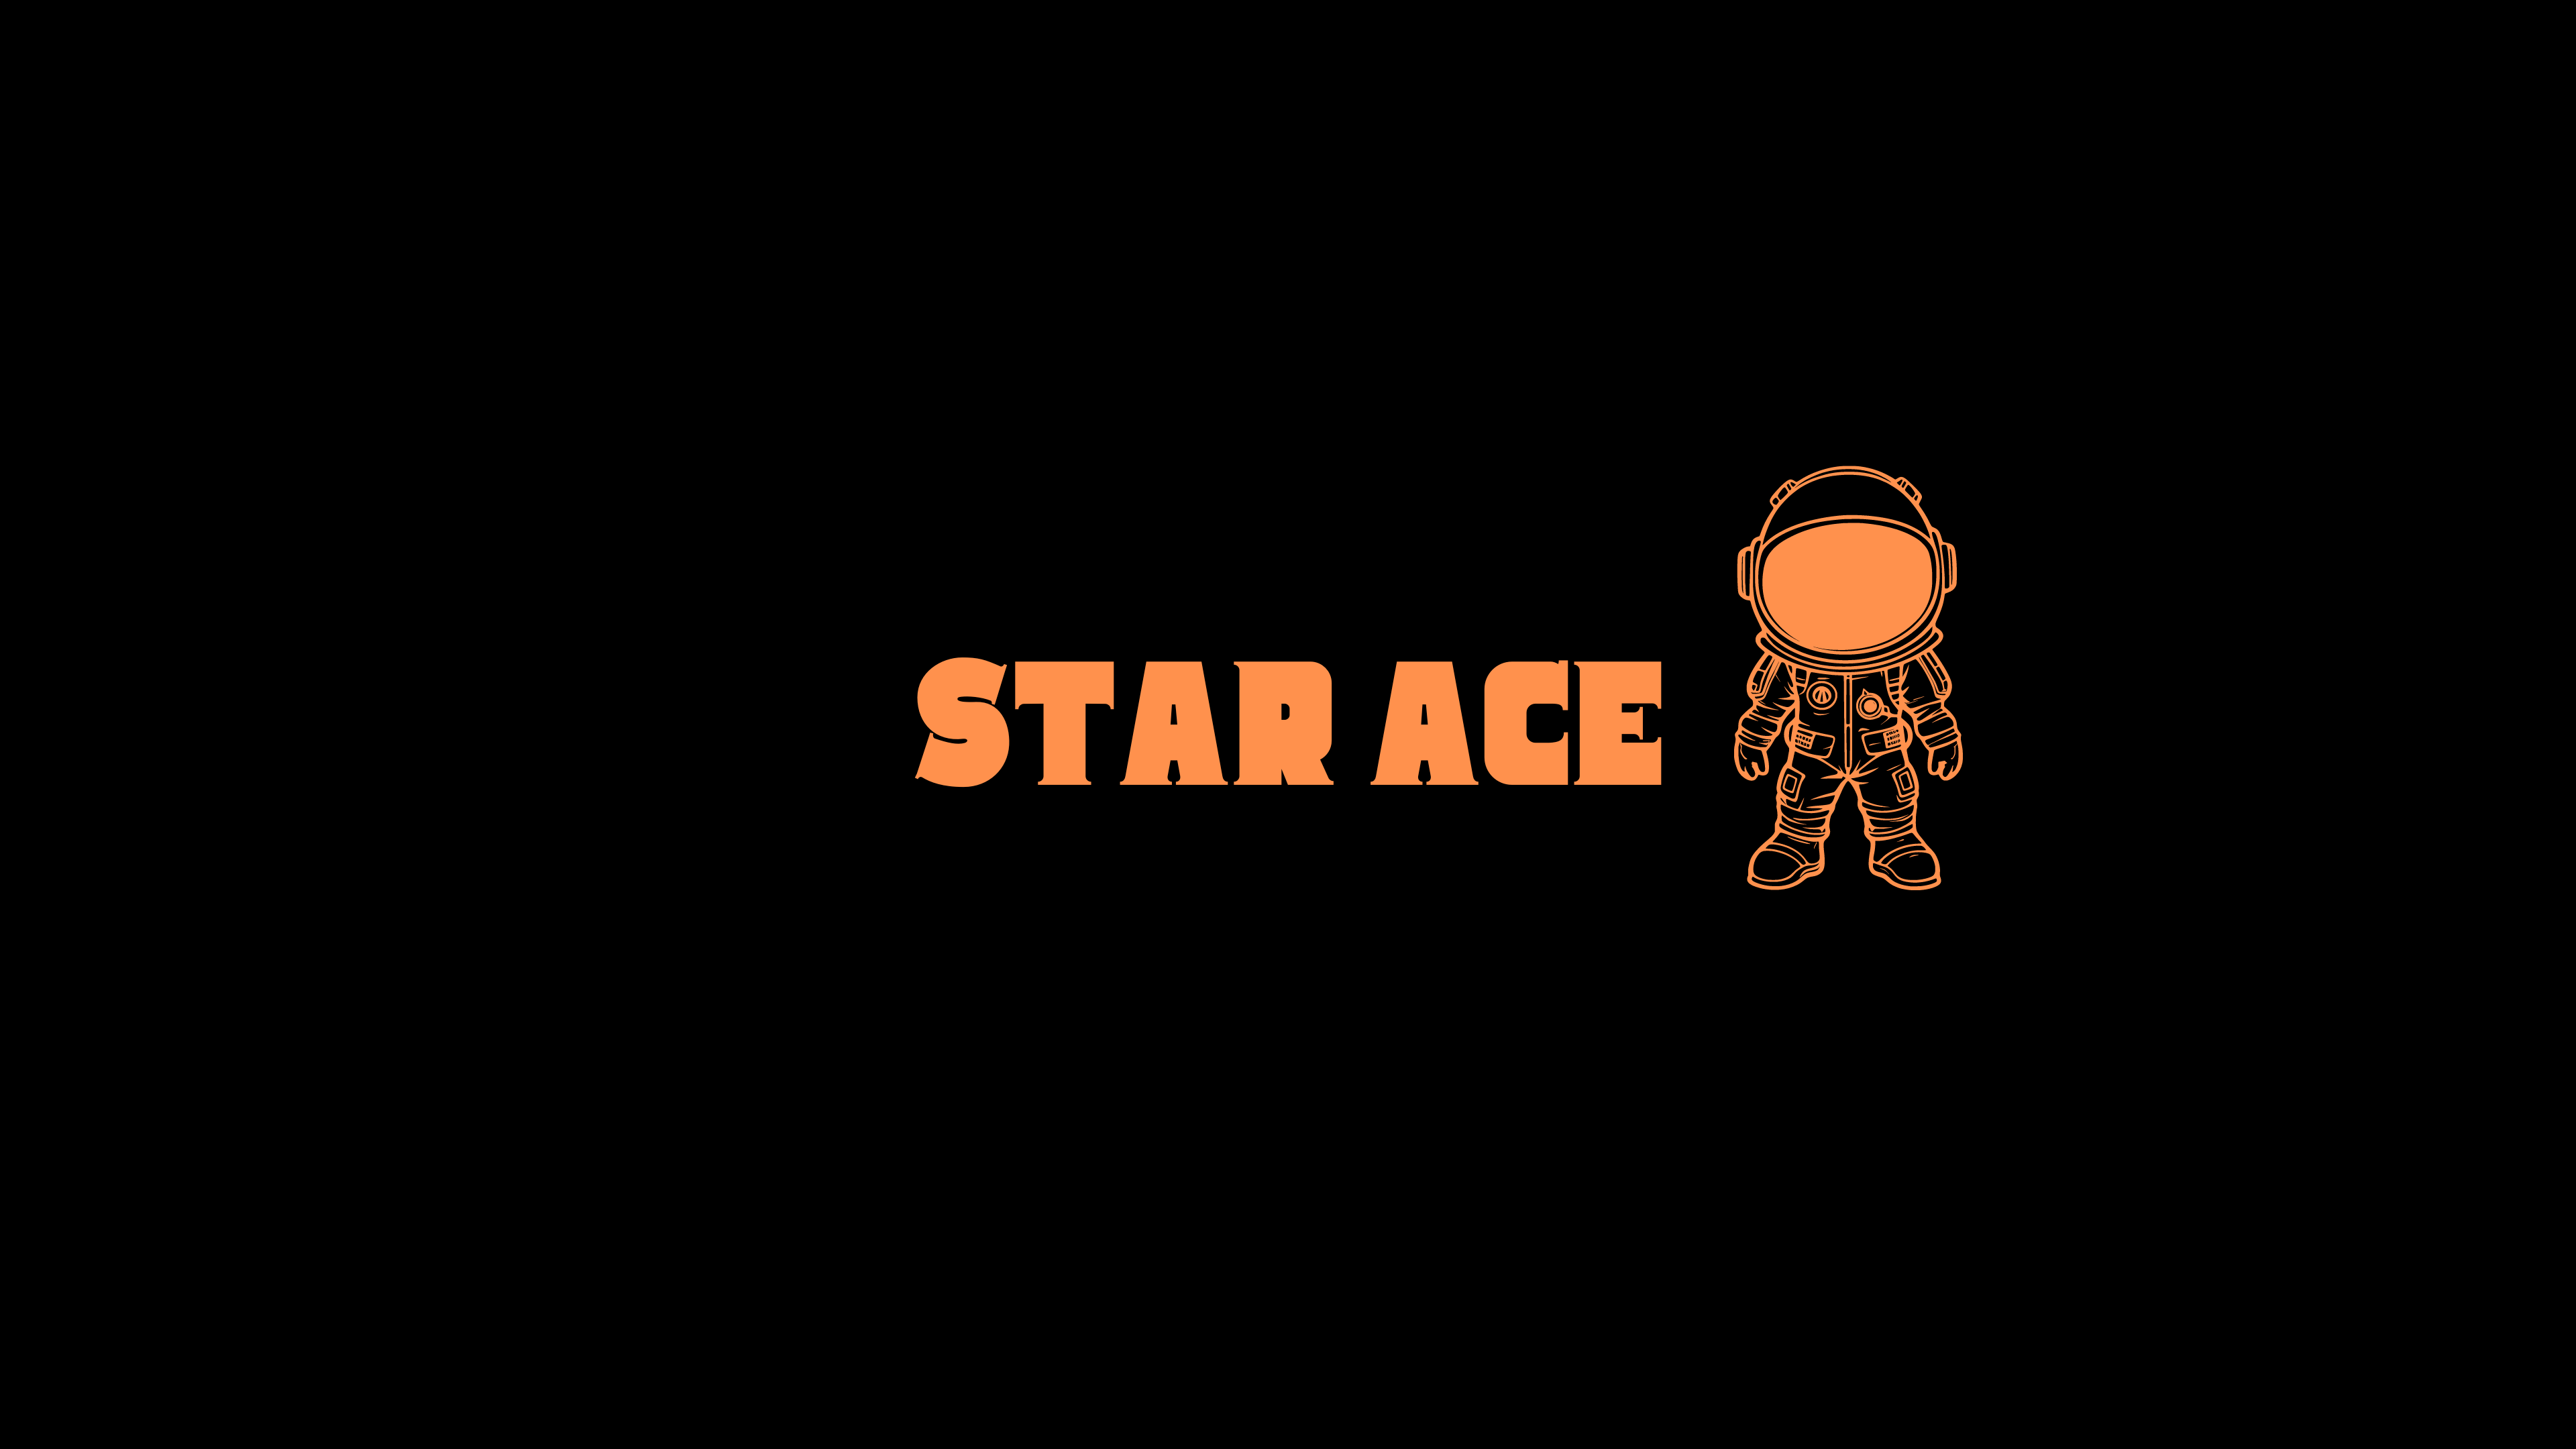 Star Ace - In Stock